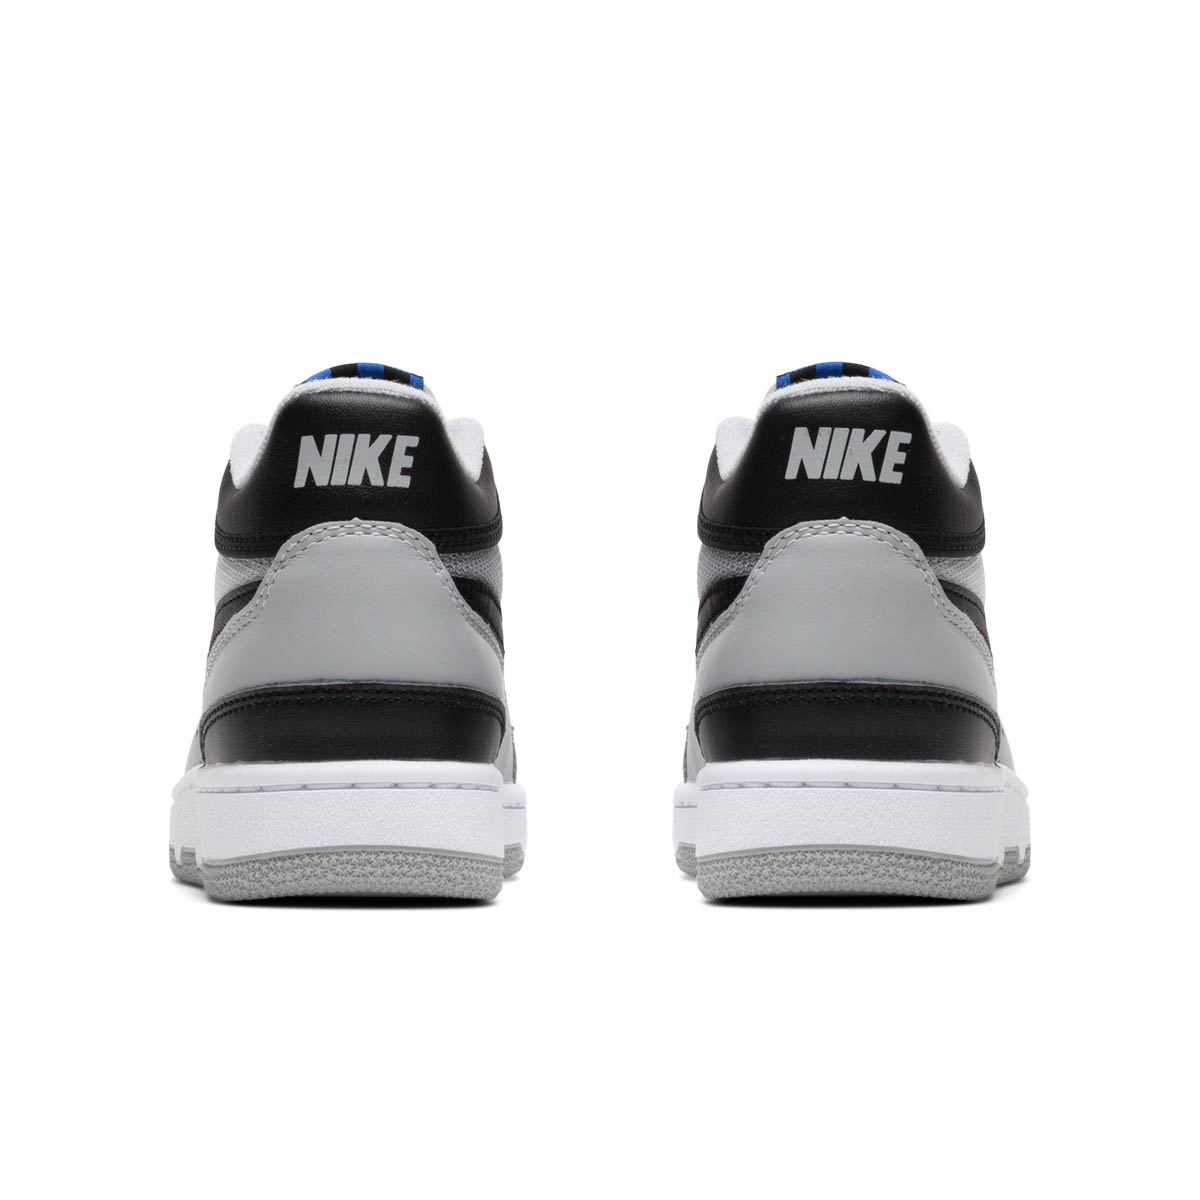 Nike Mac Attack SP LT SMOKE GREY/BLACK-WHITE